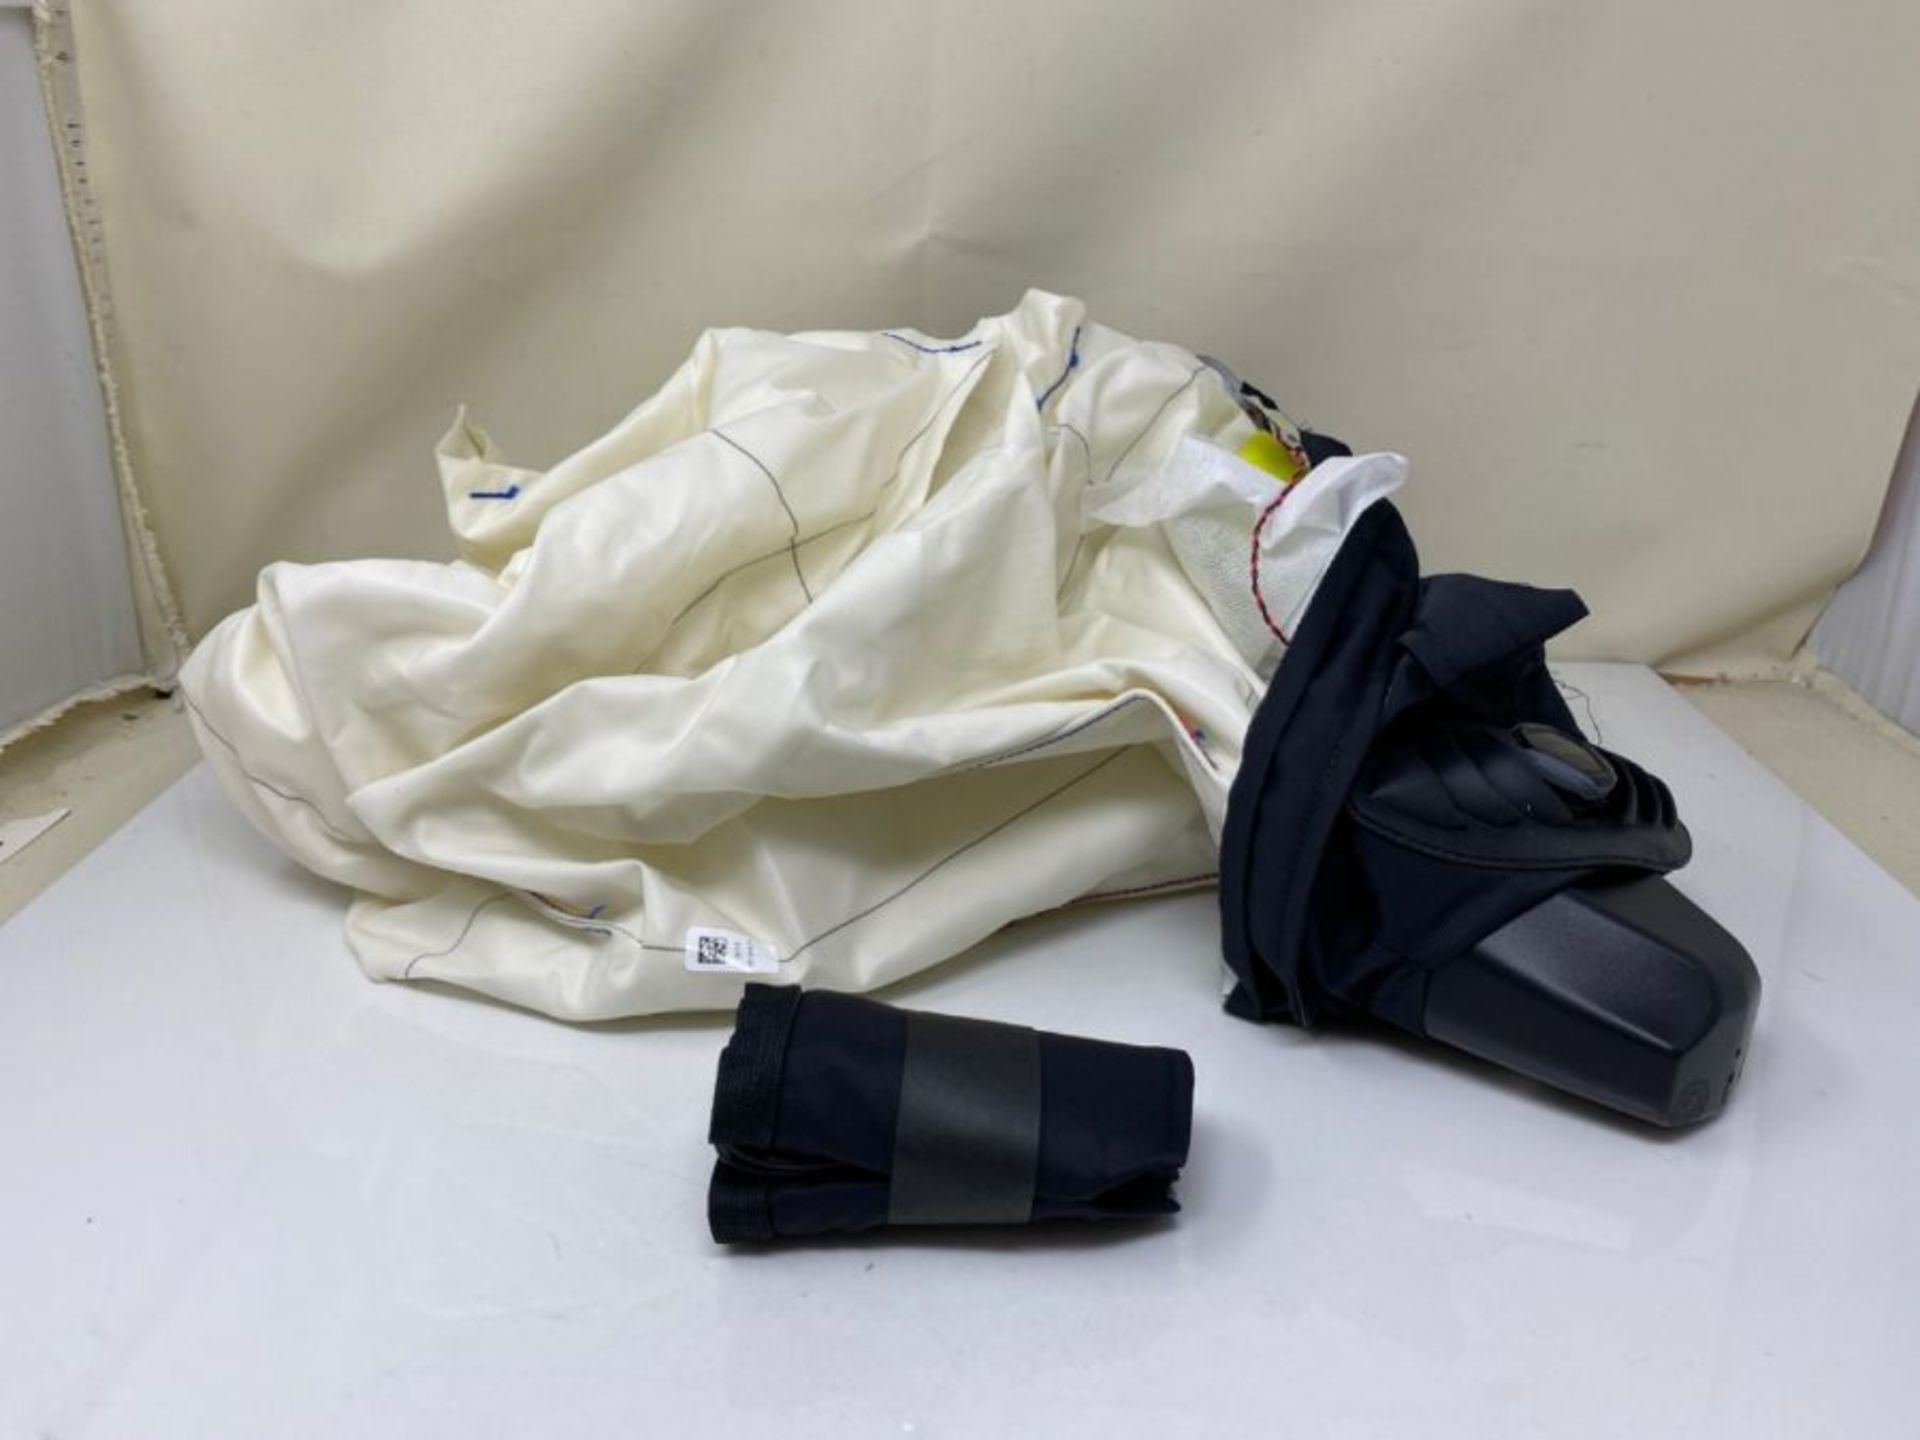 RRP £275.00 Hövding Unisex - Adult's 3 Airbag Helmet, Black, 52 - 59 cm Kopfumfang - Image 3 of 3